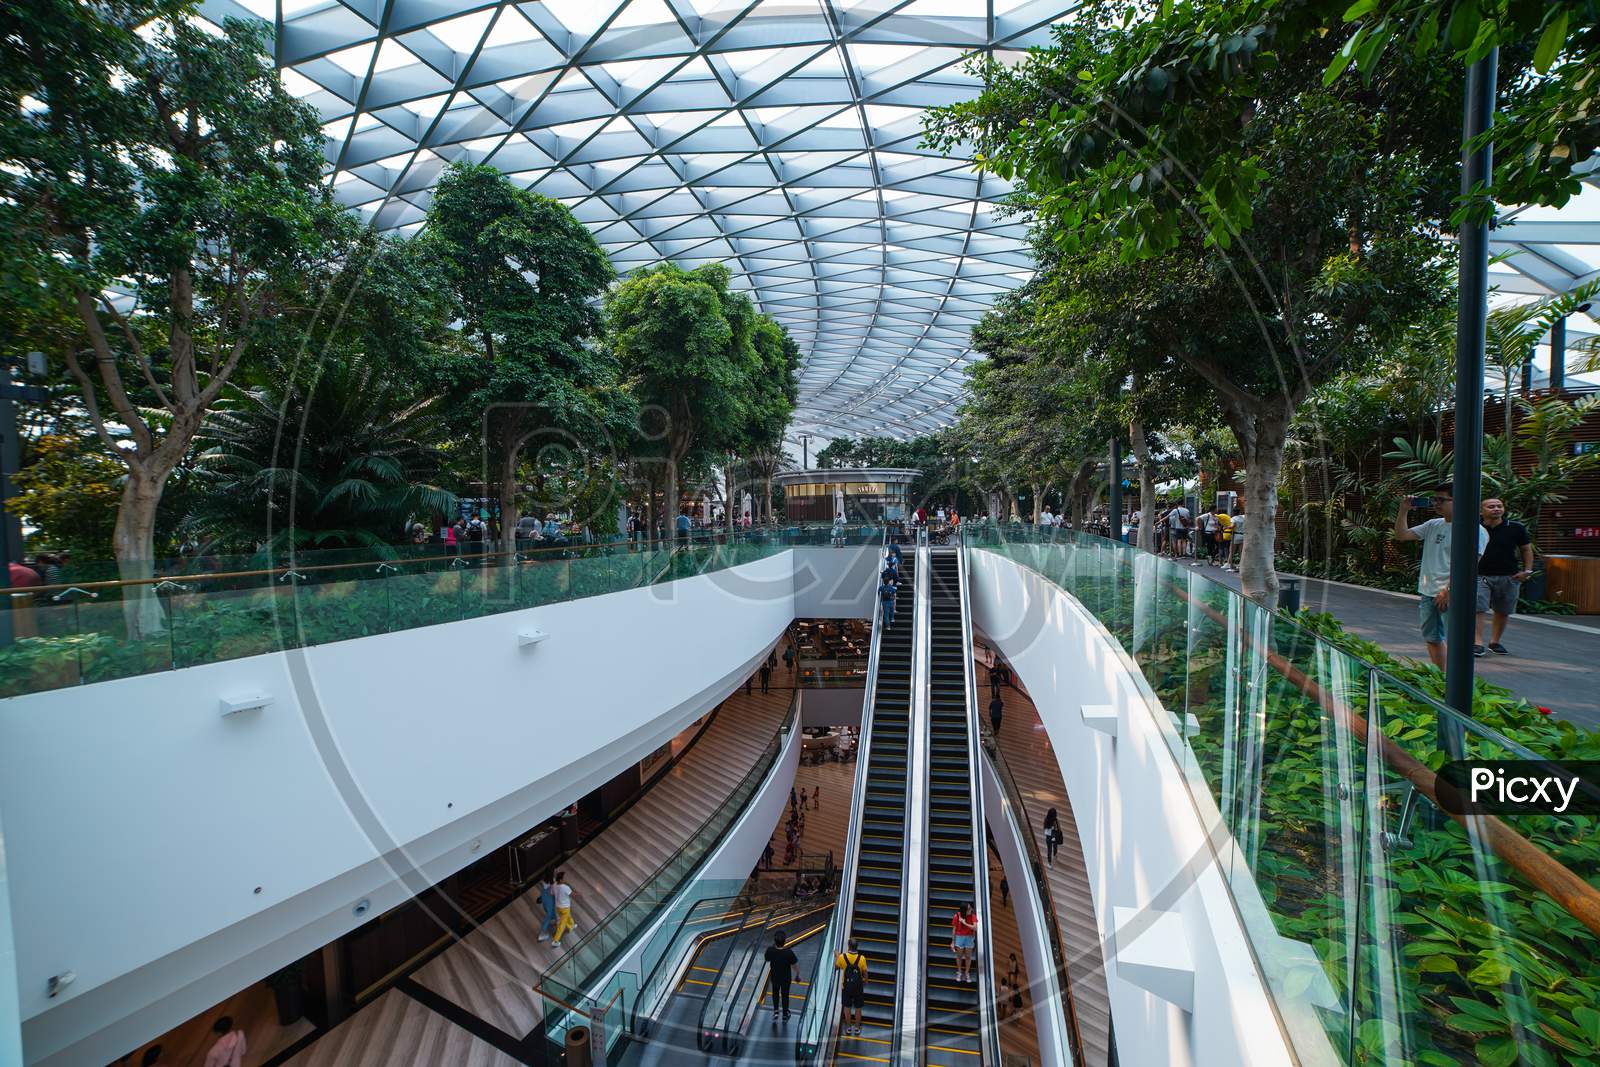 Singapore City, Singapore - The Shopping malls inside Jewel Changi Airport in Singapore 2019